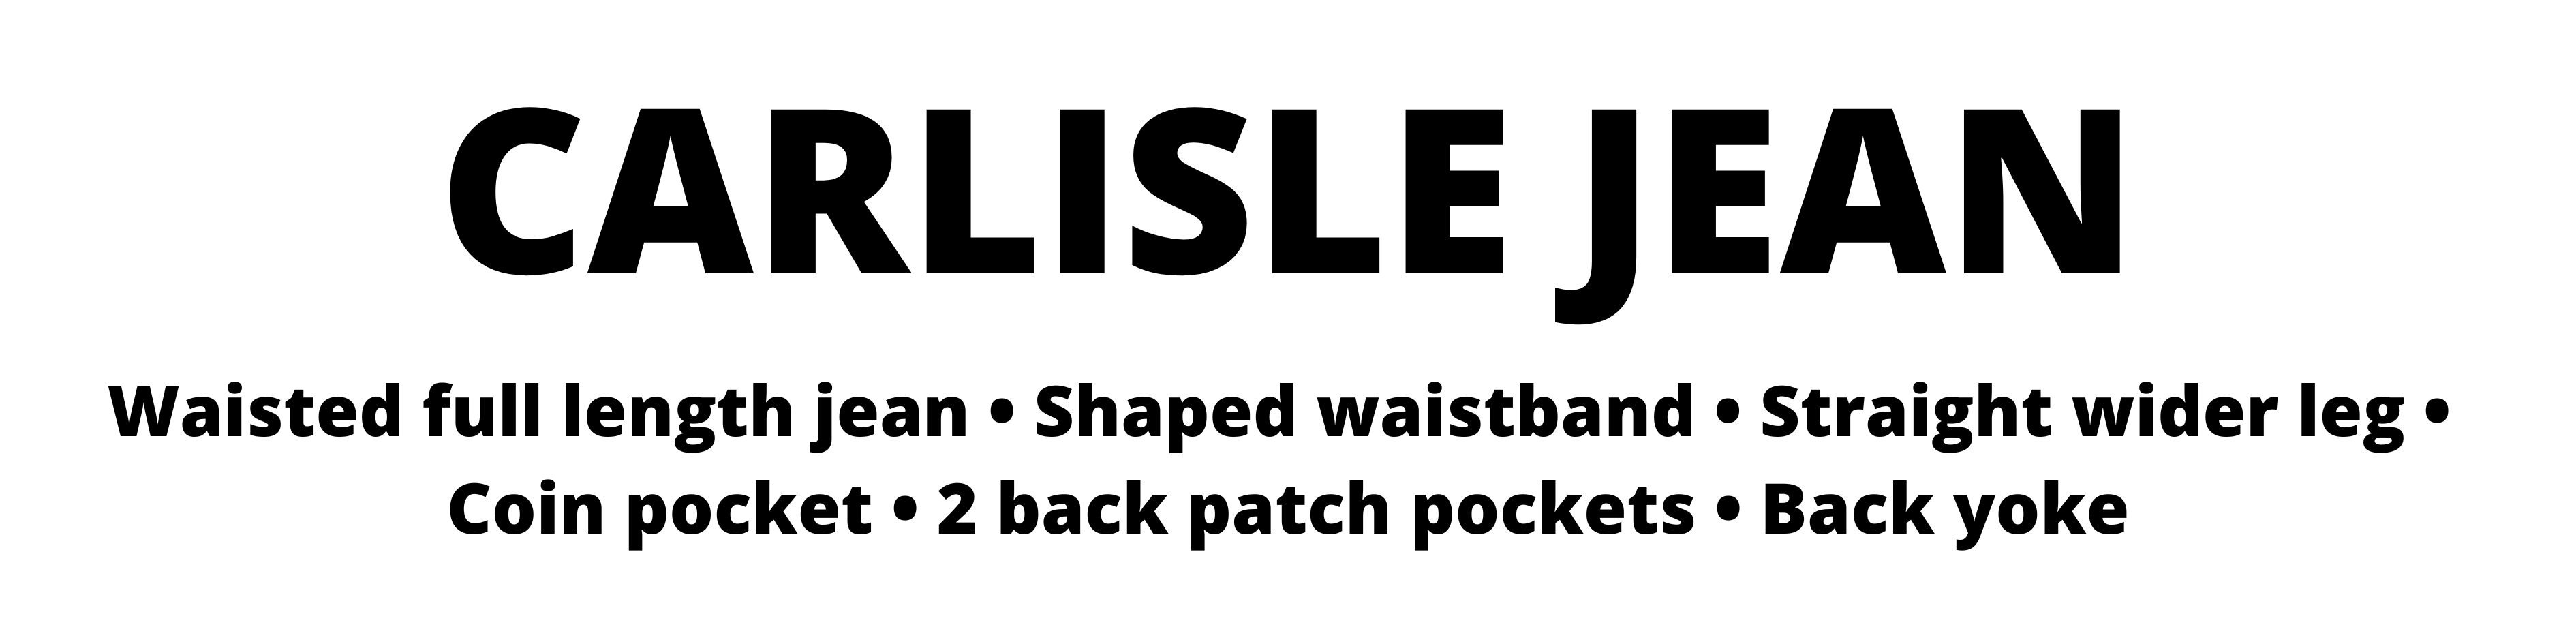 Carlisle Jean - New Pattern